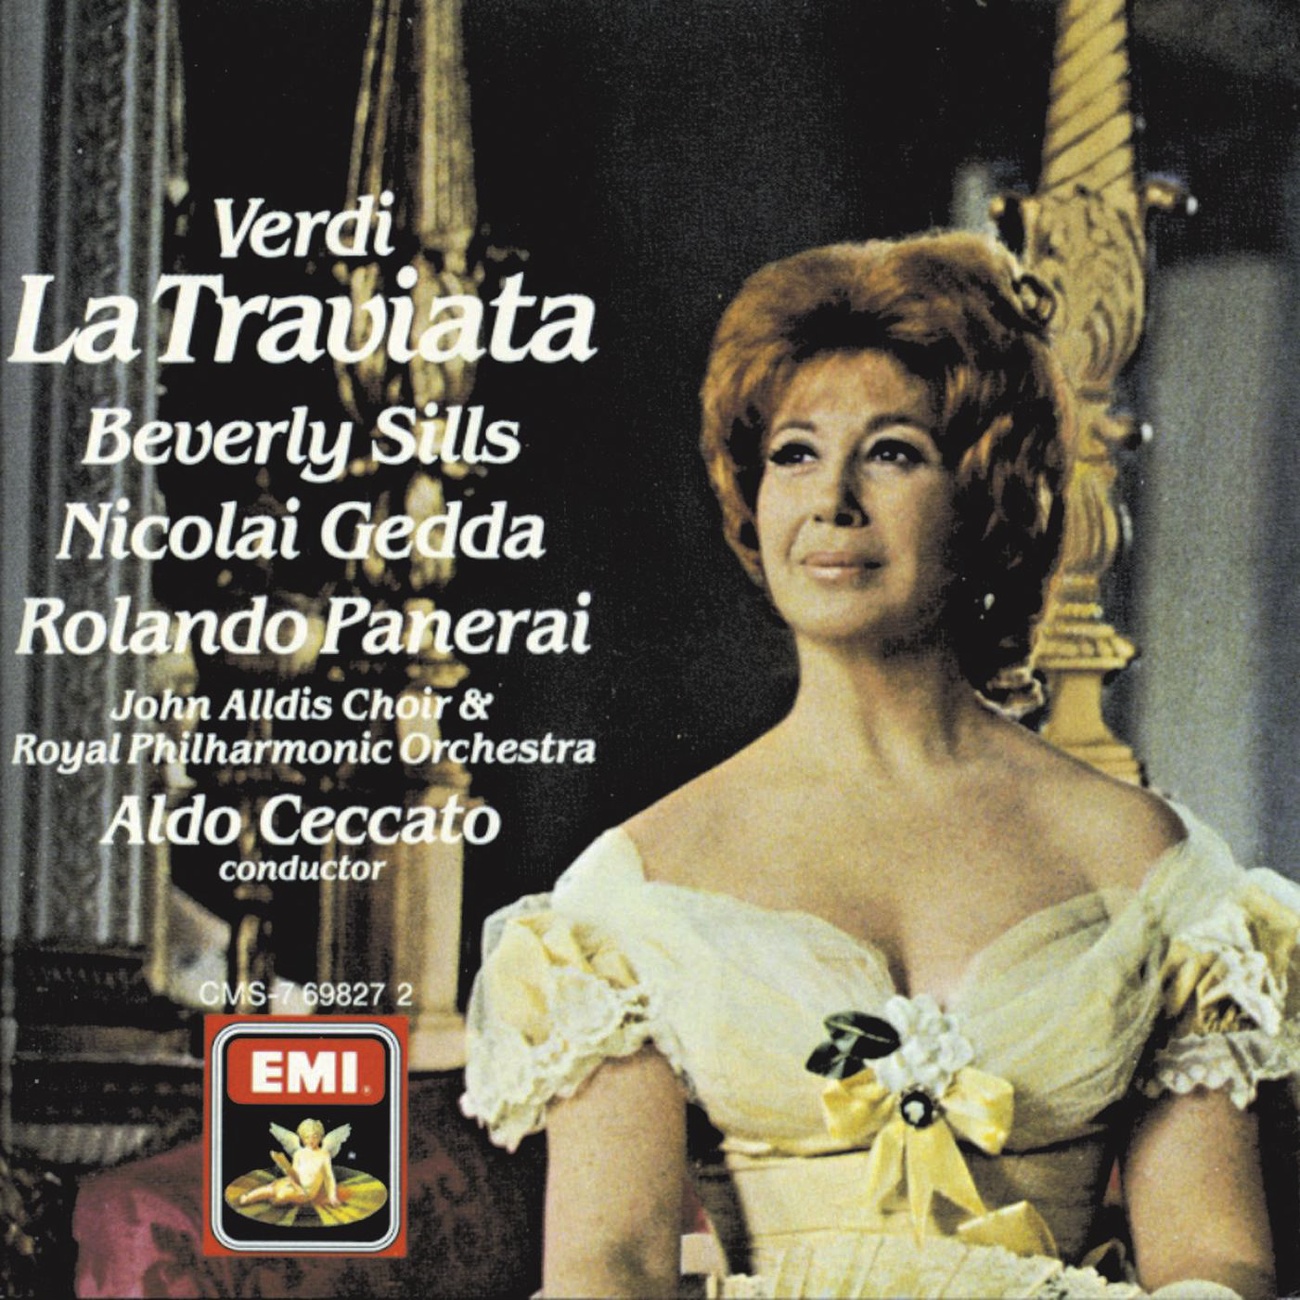 La Traviata (1988 Digital Remaster), Act I: Follie! Follie! (Violetta)